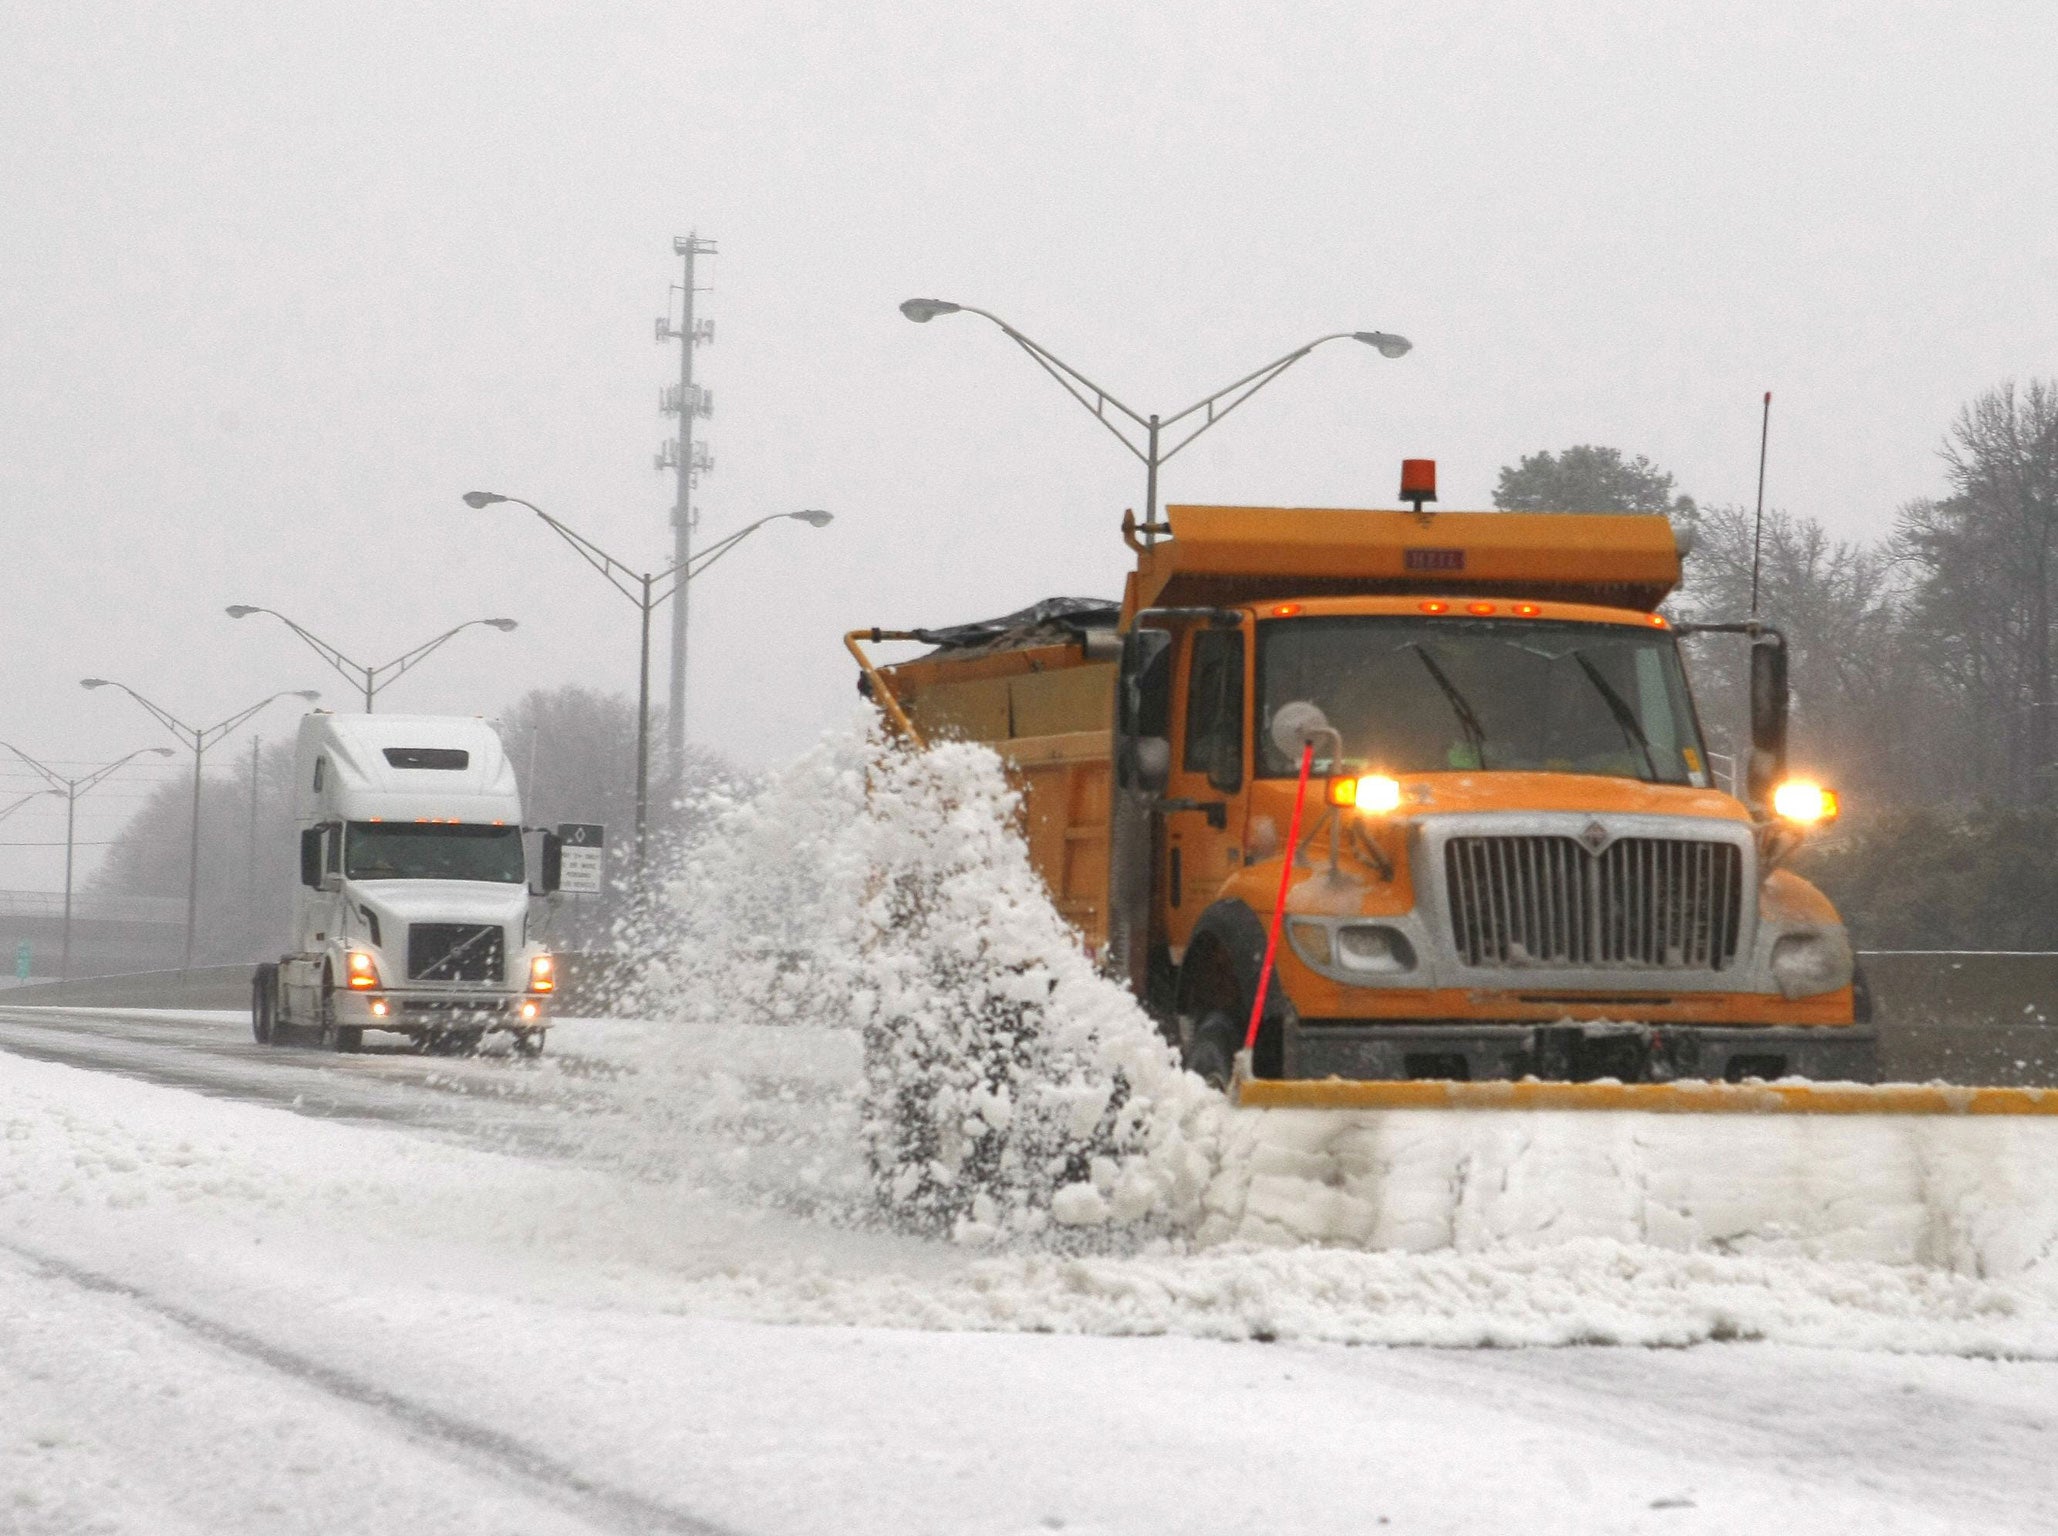 A snow plow knocks snow off the an Atlanta expressway during an ice storm in Atlanta, Georgia, February 12, 2014